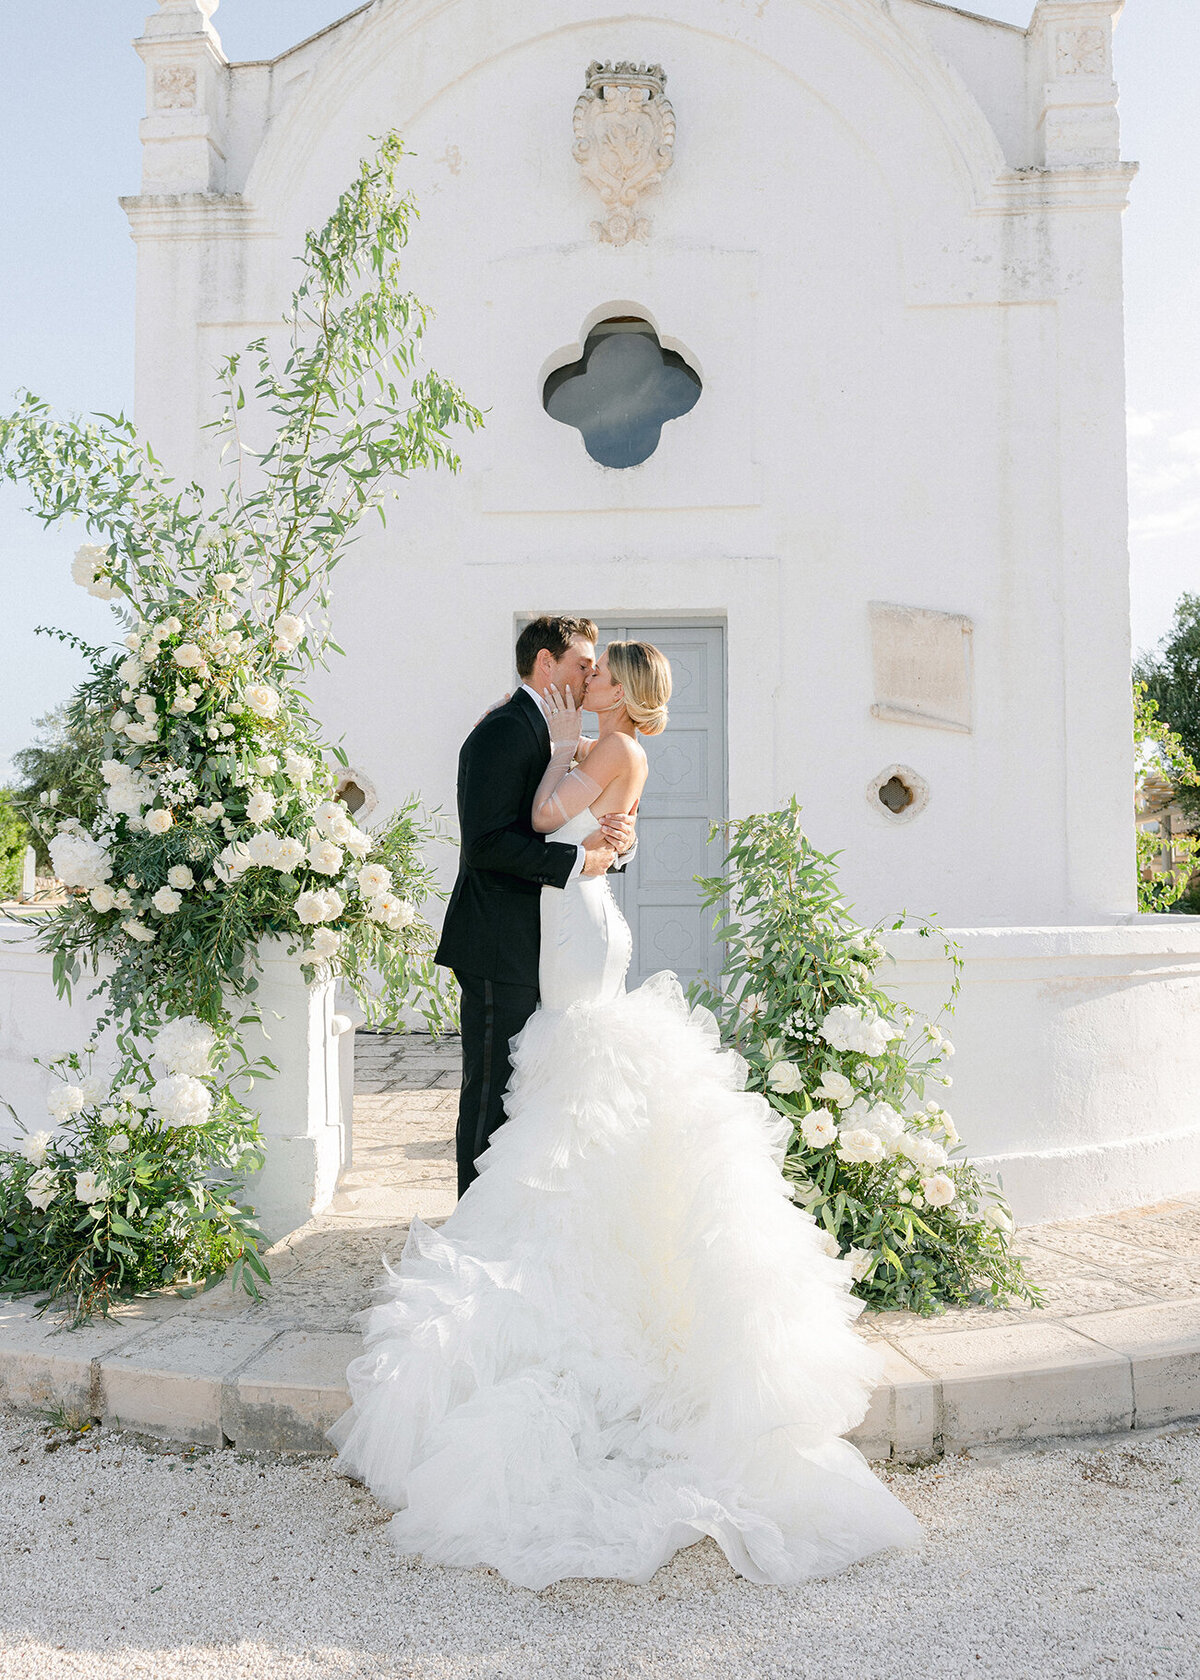 Masseria Amastuola wedding by Nastia Vesna photography.